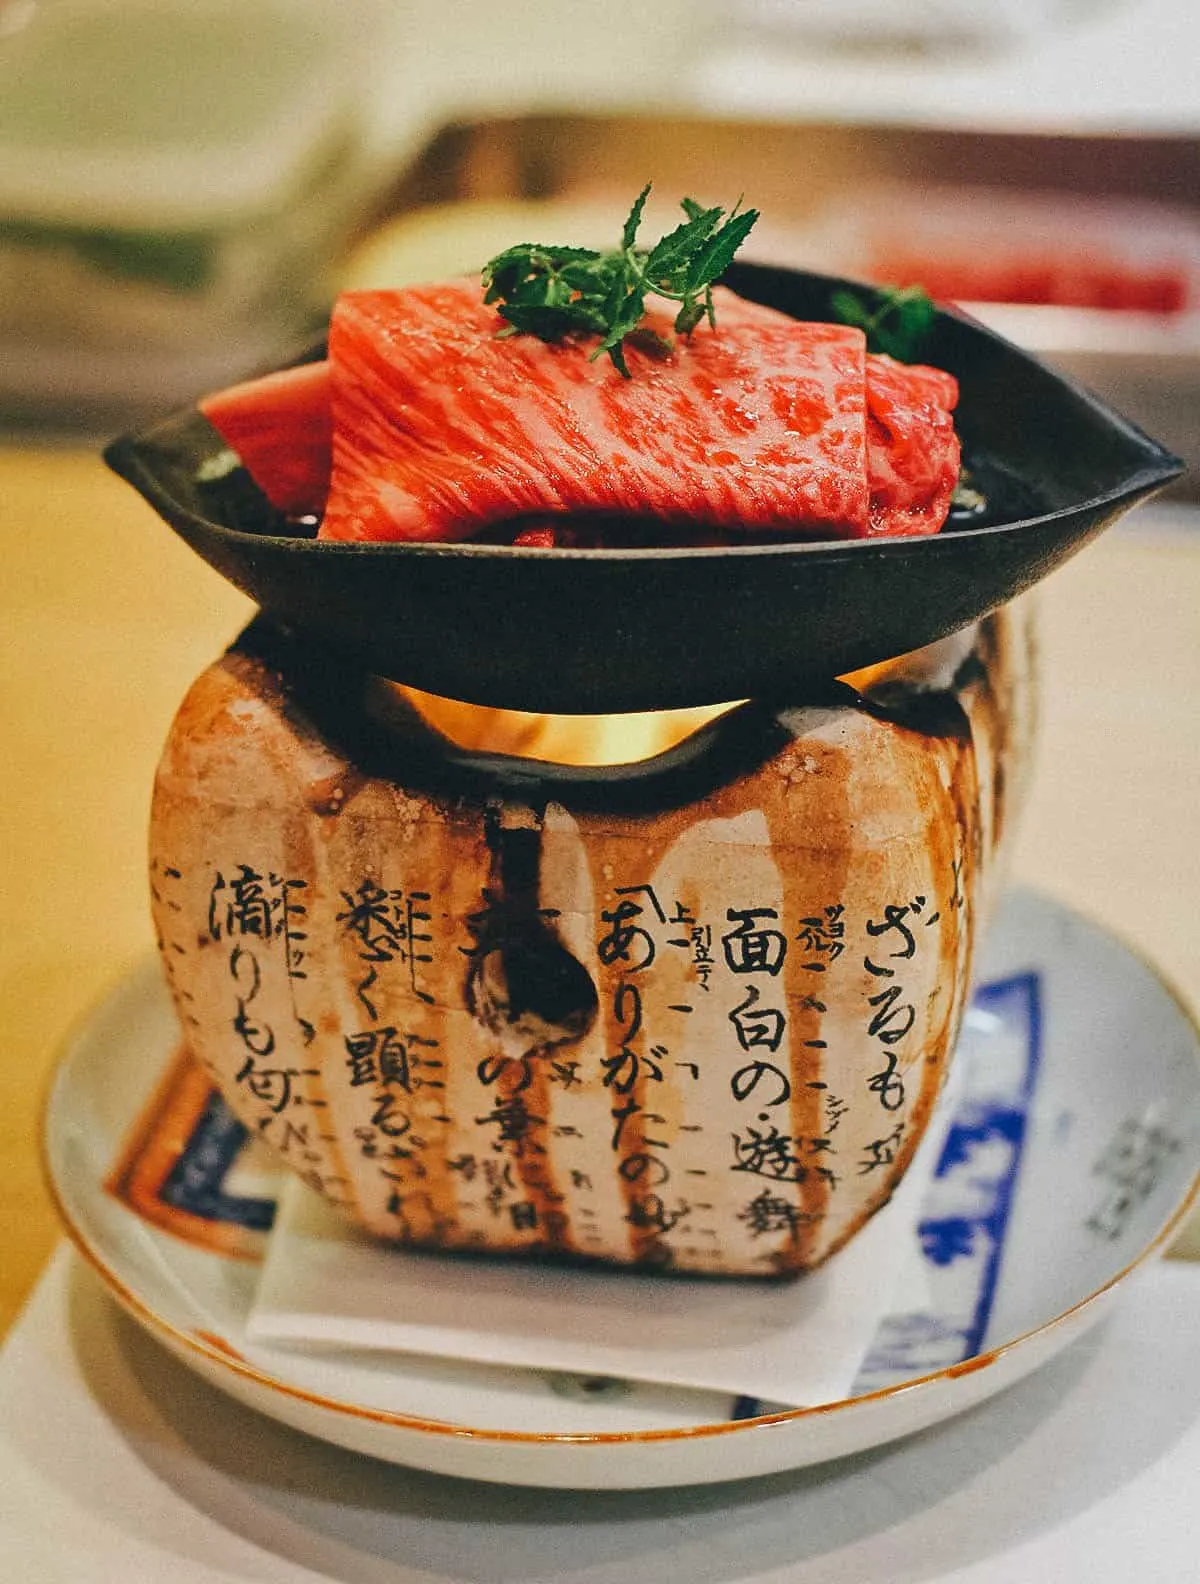 Saga beef at Iroha restaurant in Osaka